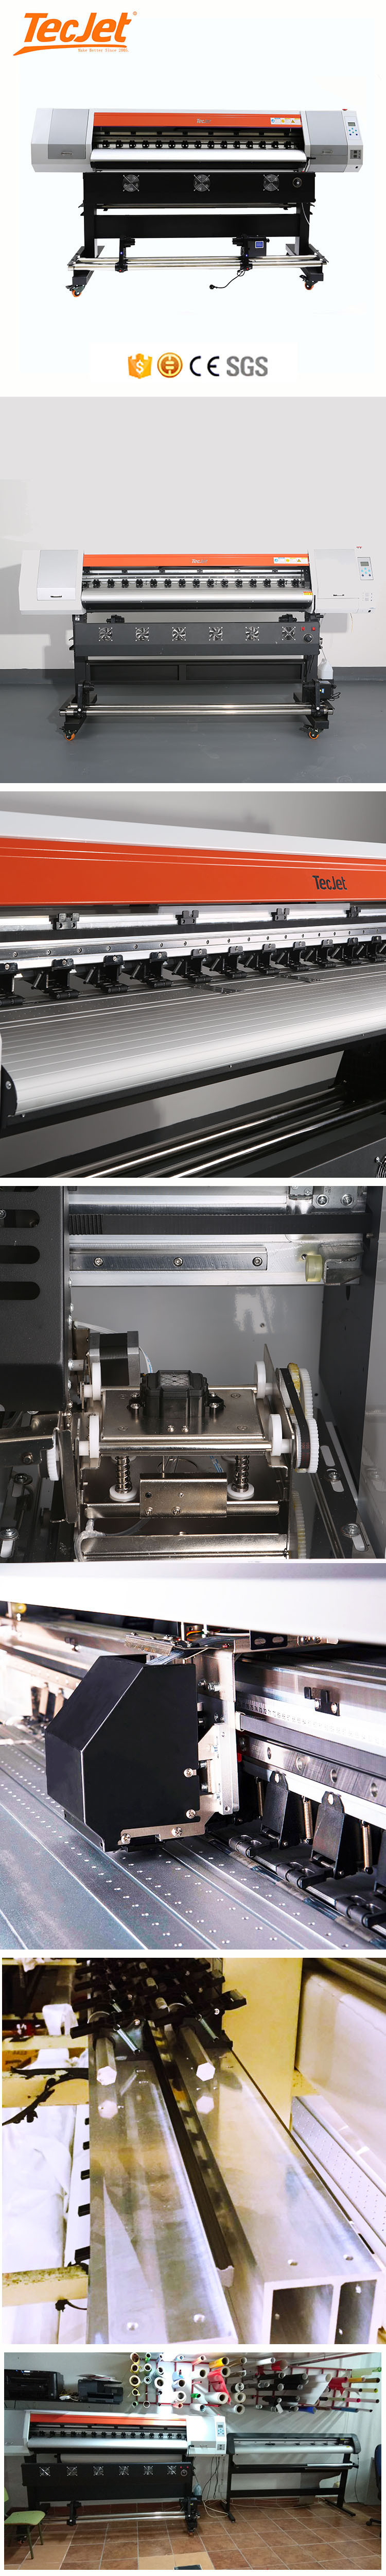 Tecjet 1871 Free Sample Low Price 1.8m Dx5/Dx7/5113 Digital Inkjet Sublimation Printer Carpet Printing Machine